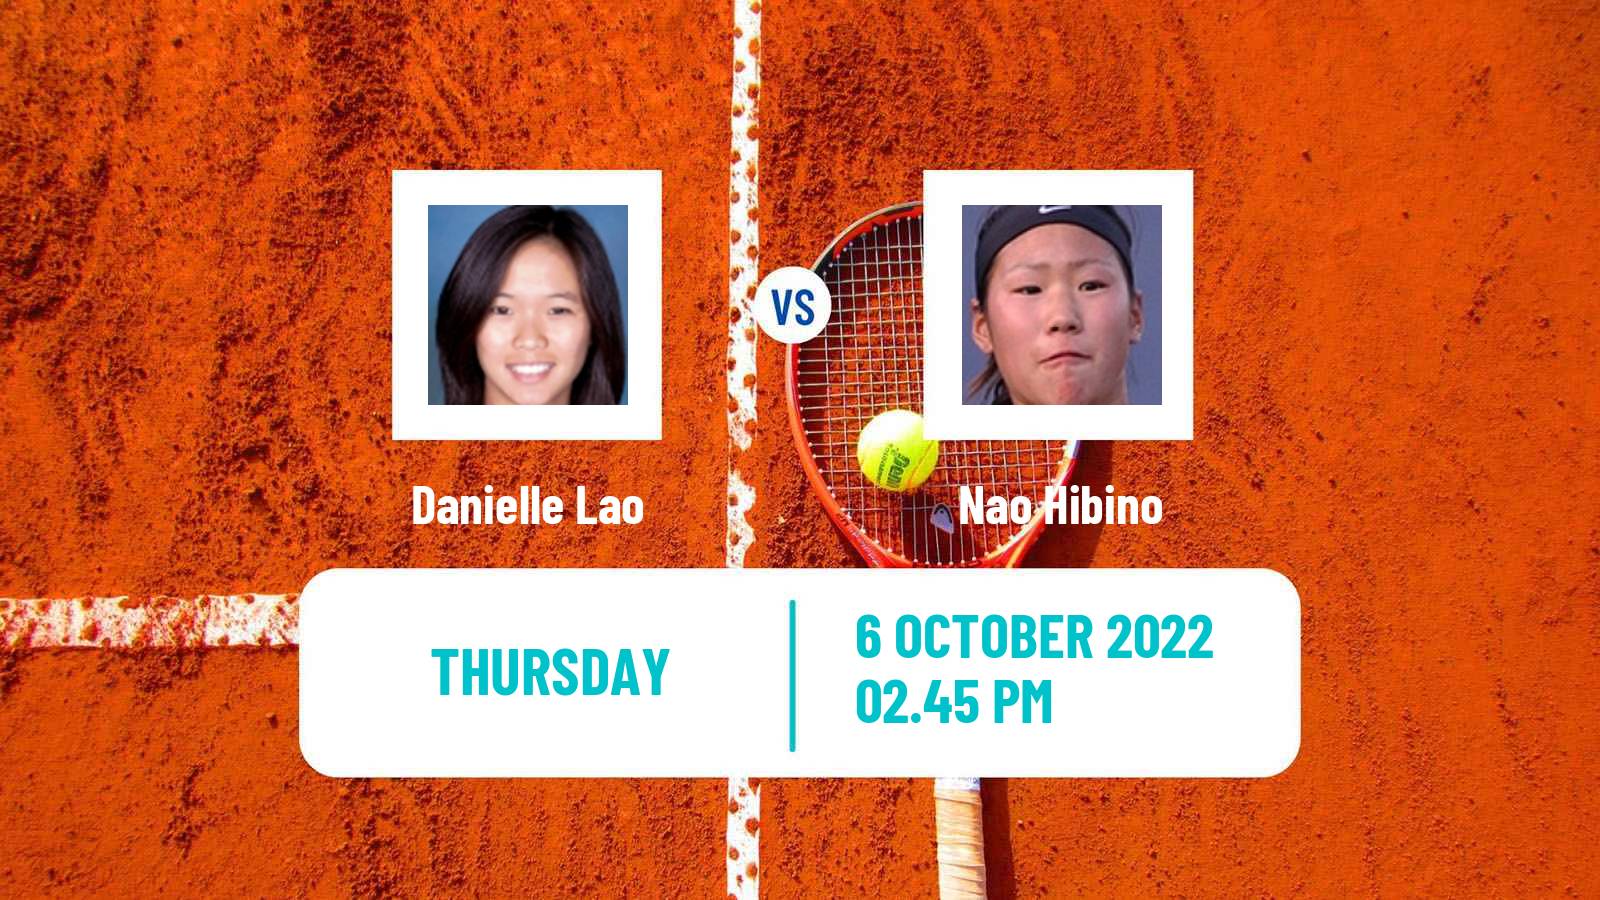 Tennis ITF Tournaments Danielle Lao - Nao Hibino